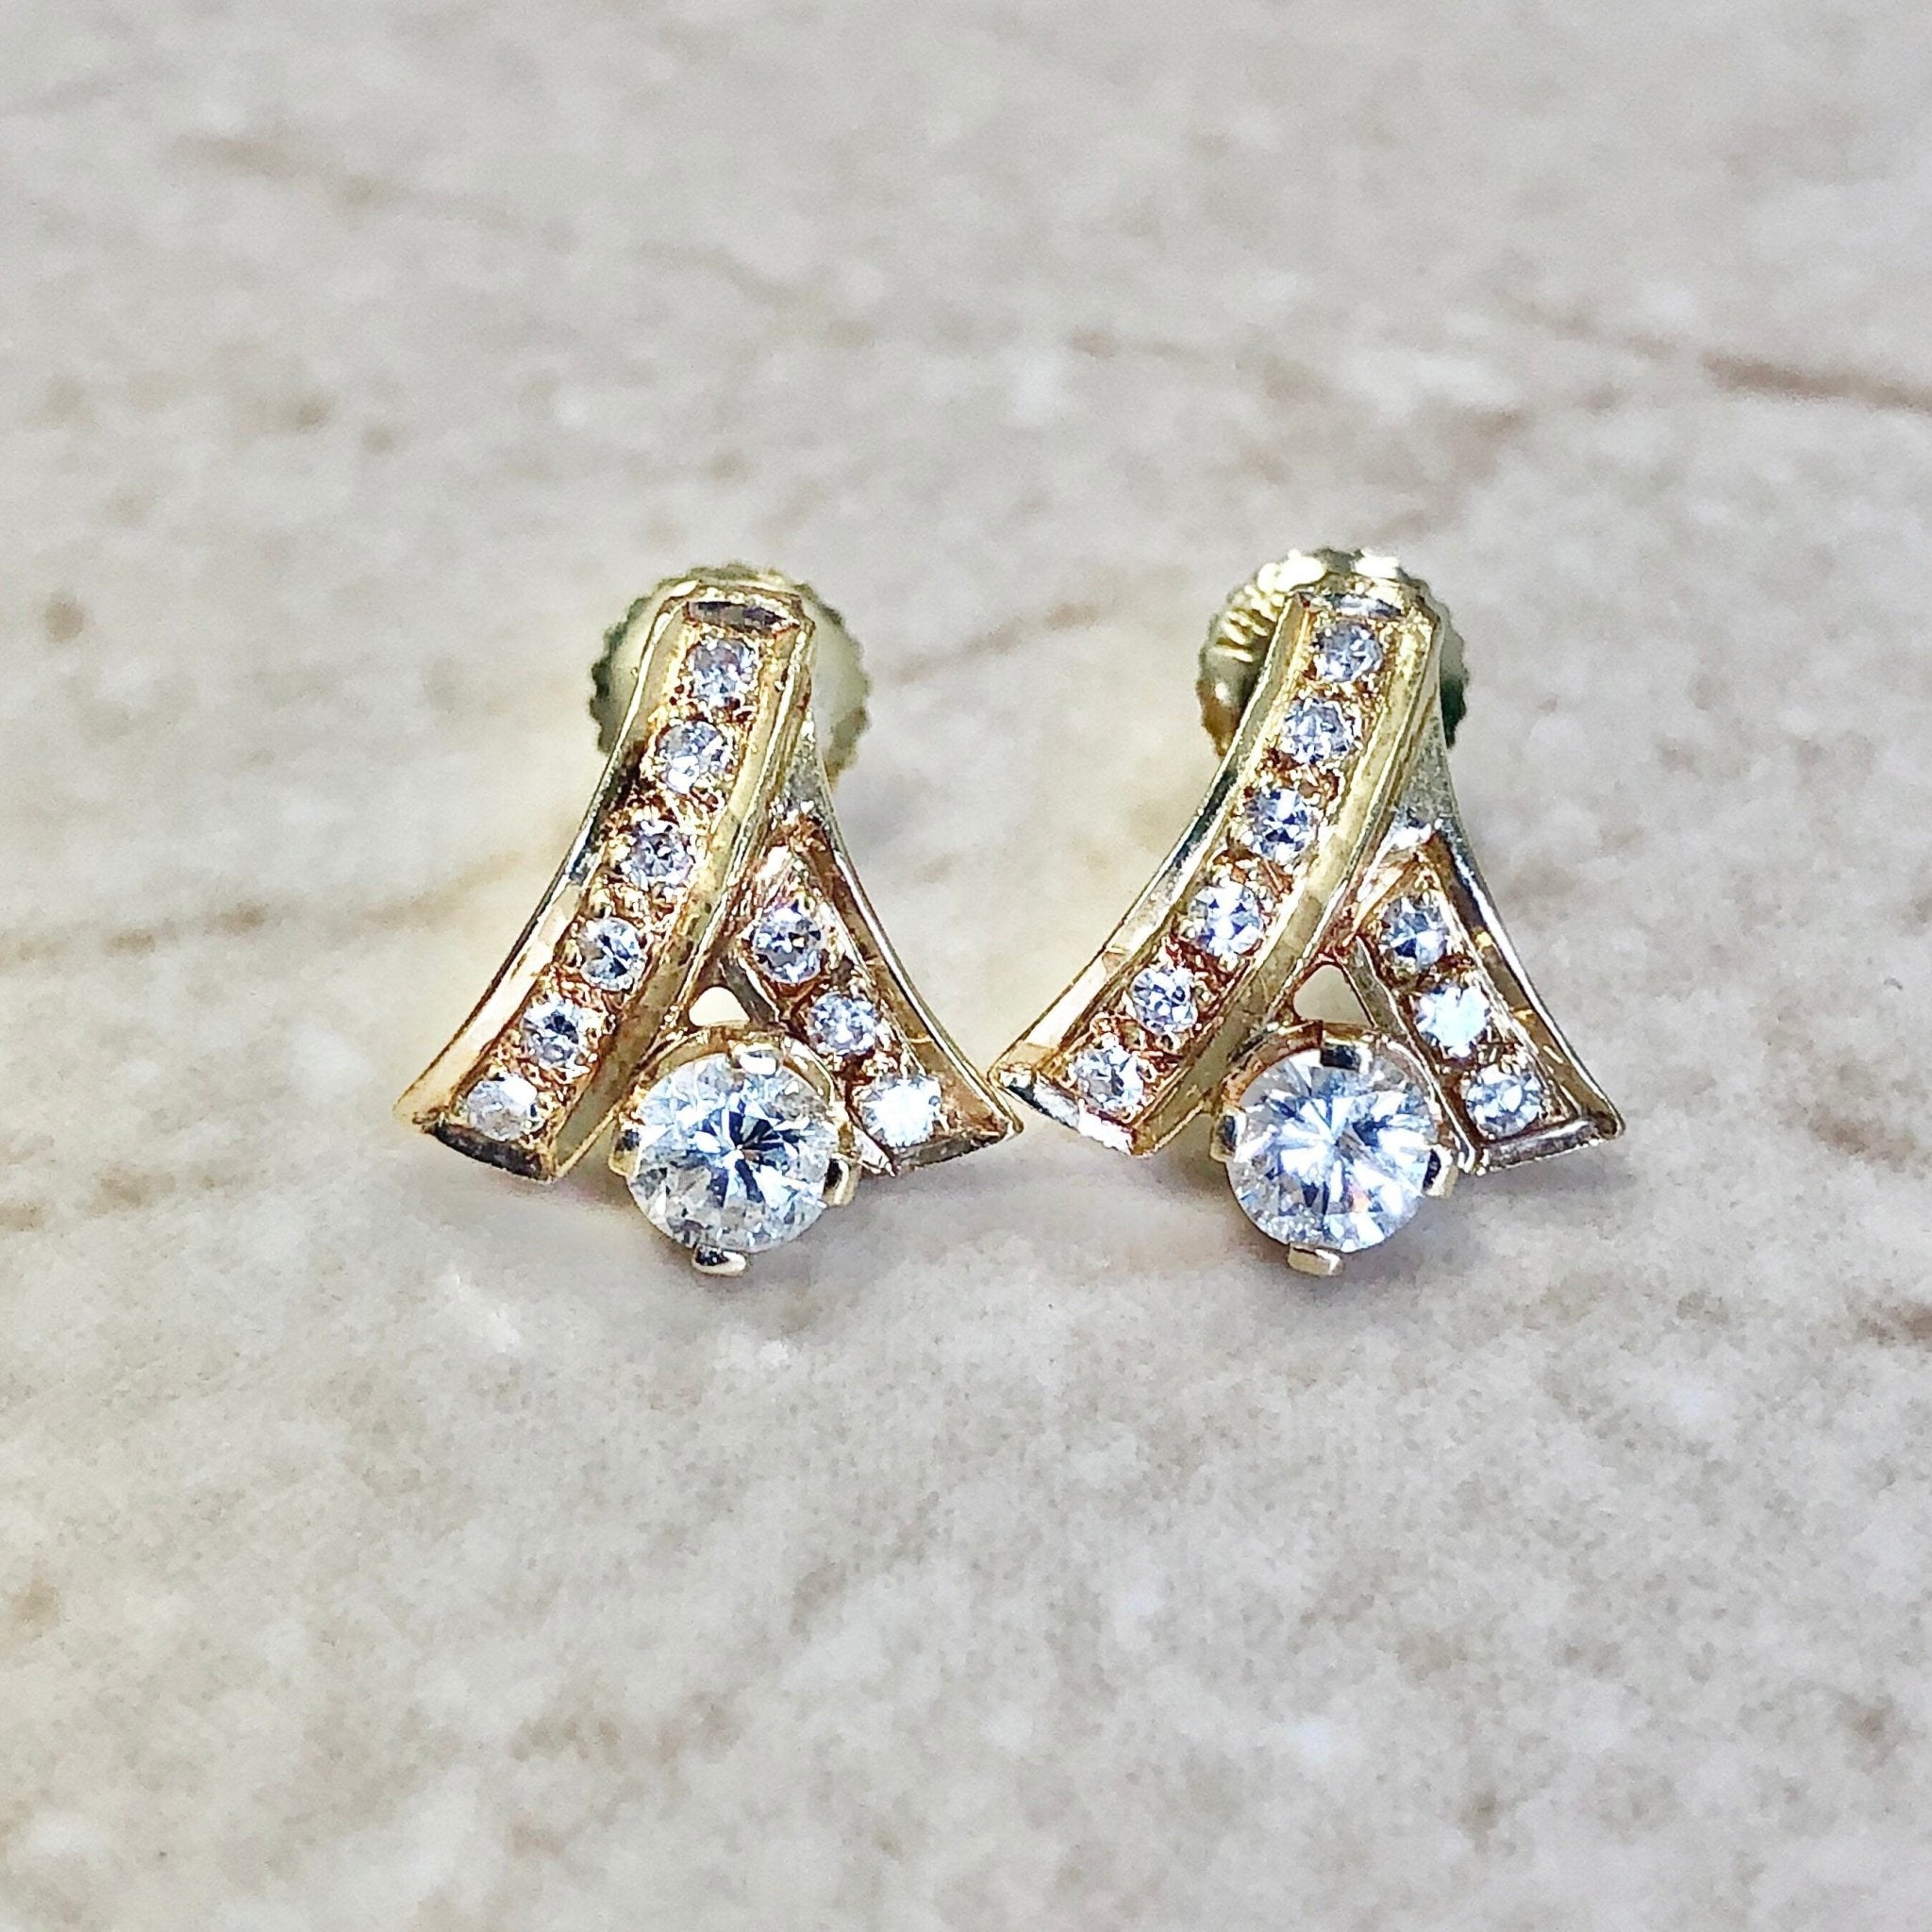 Ornate Emerald and Diamond Earrings | YAEL Designs